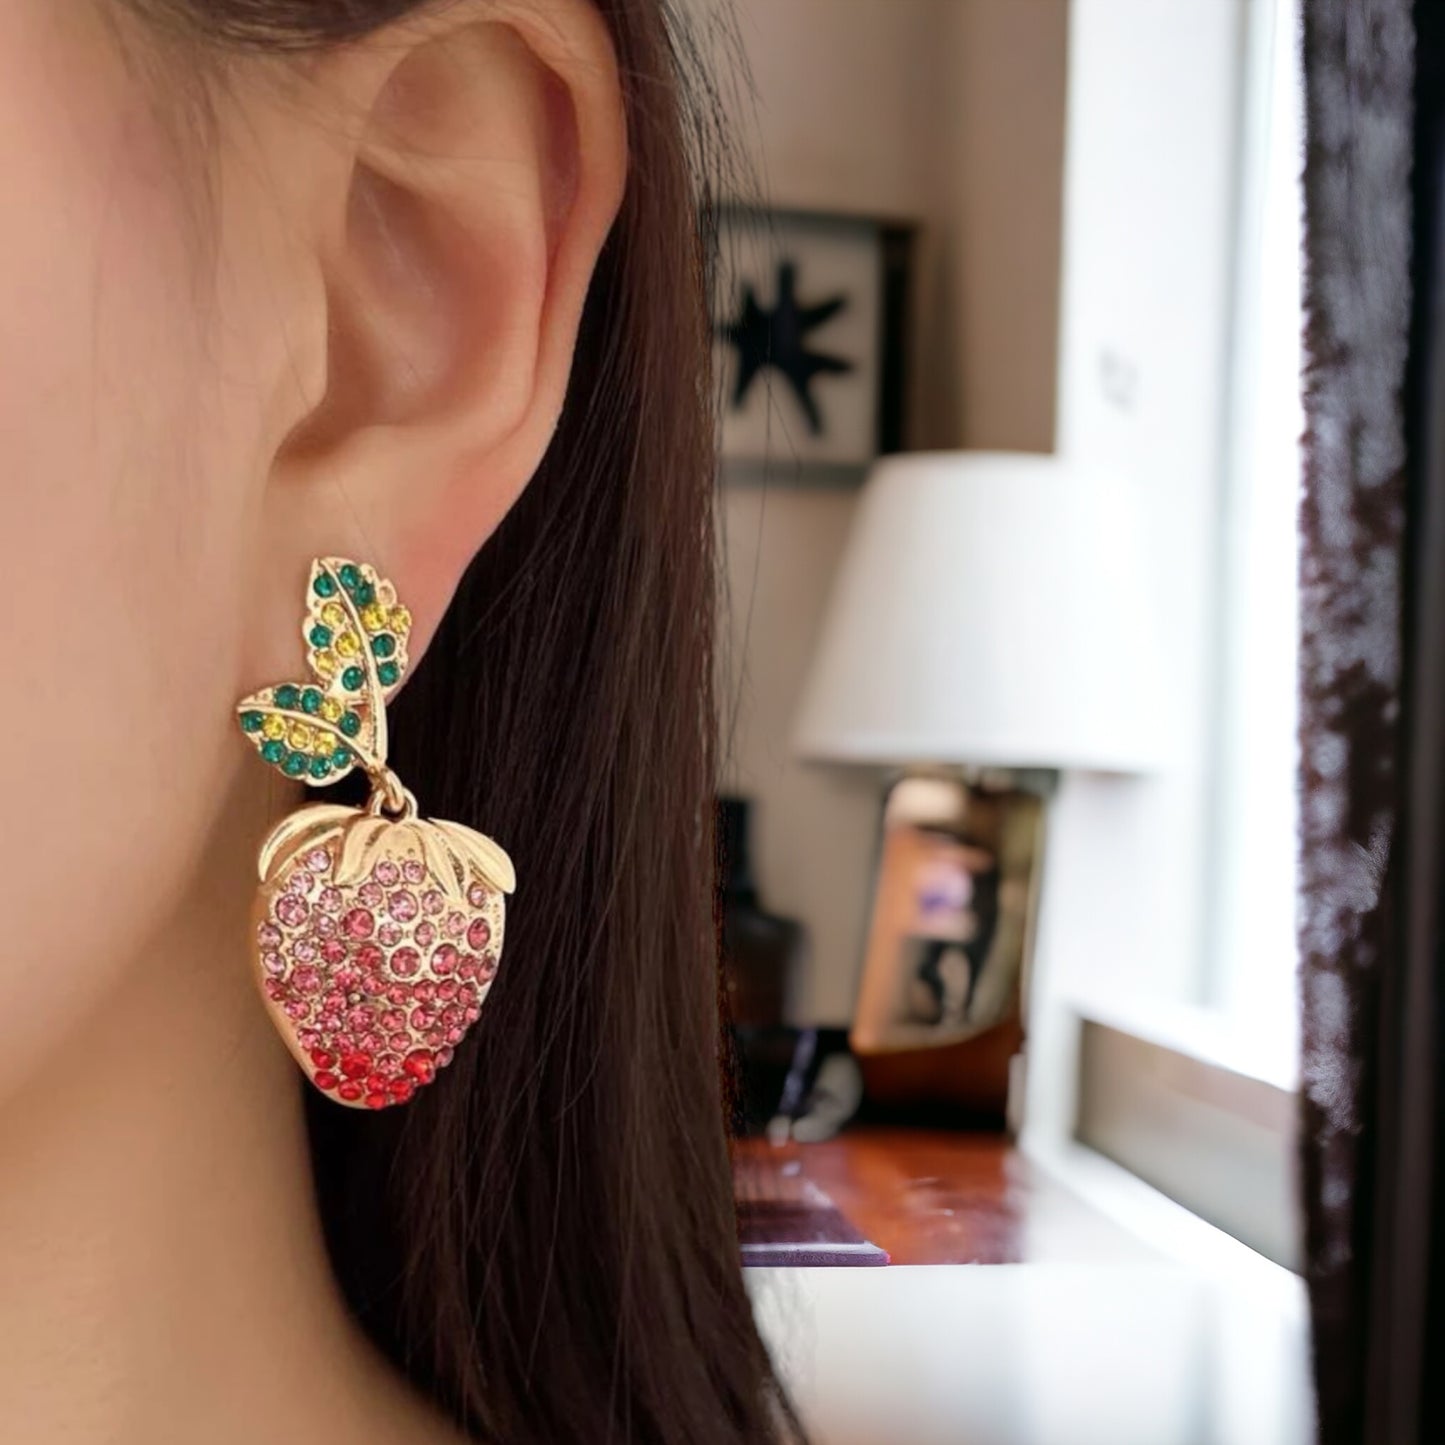 Rhinestone Stawberry Earrings - Food Earrings, Strawberry Accessories, Handmade Earrings, Summertime Accessories